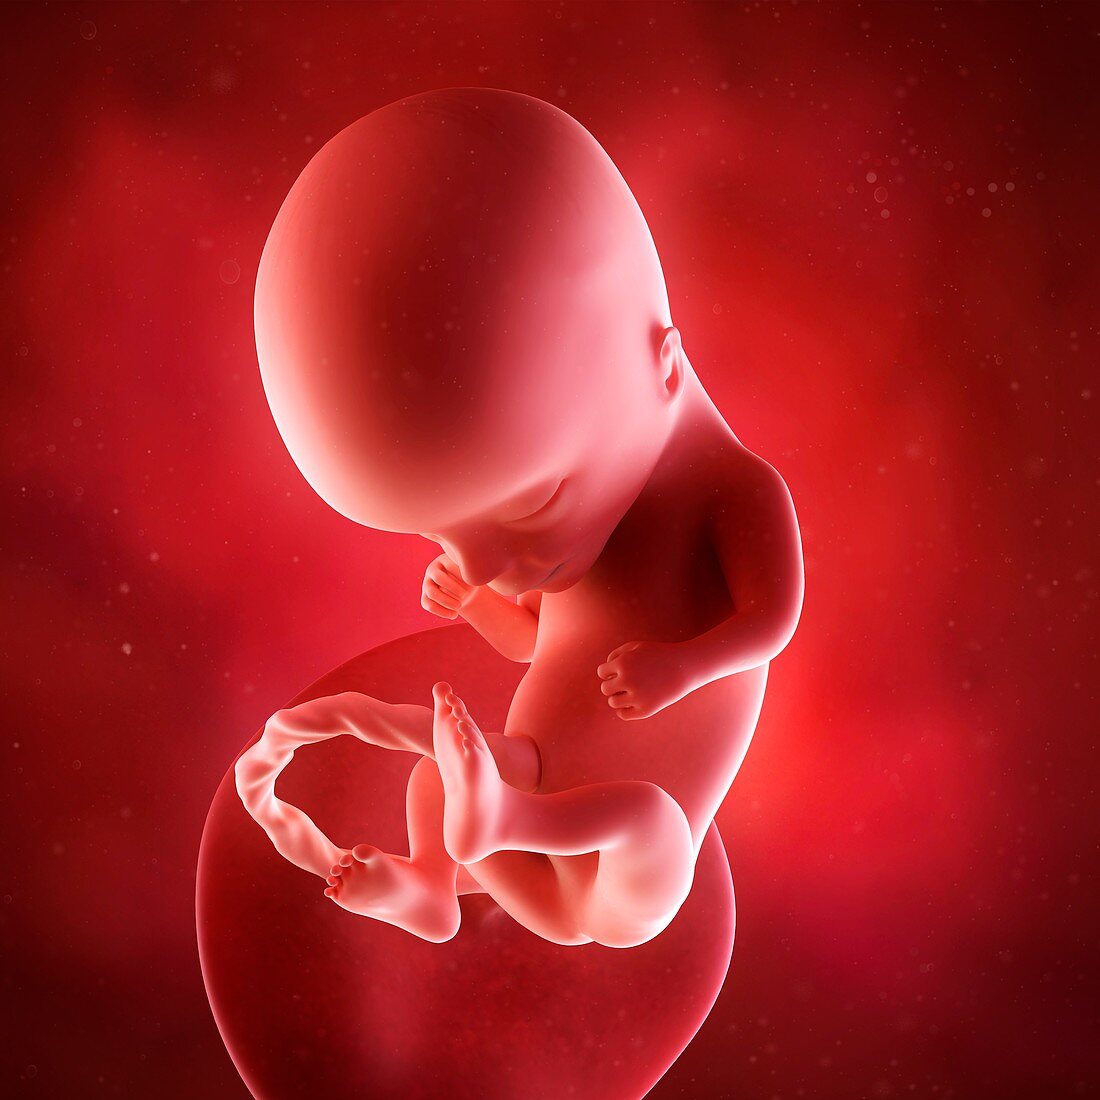 Human fetus age 14 weeks